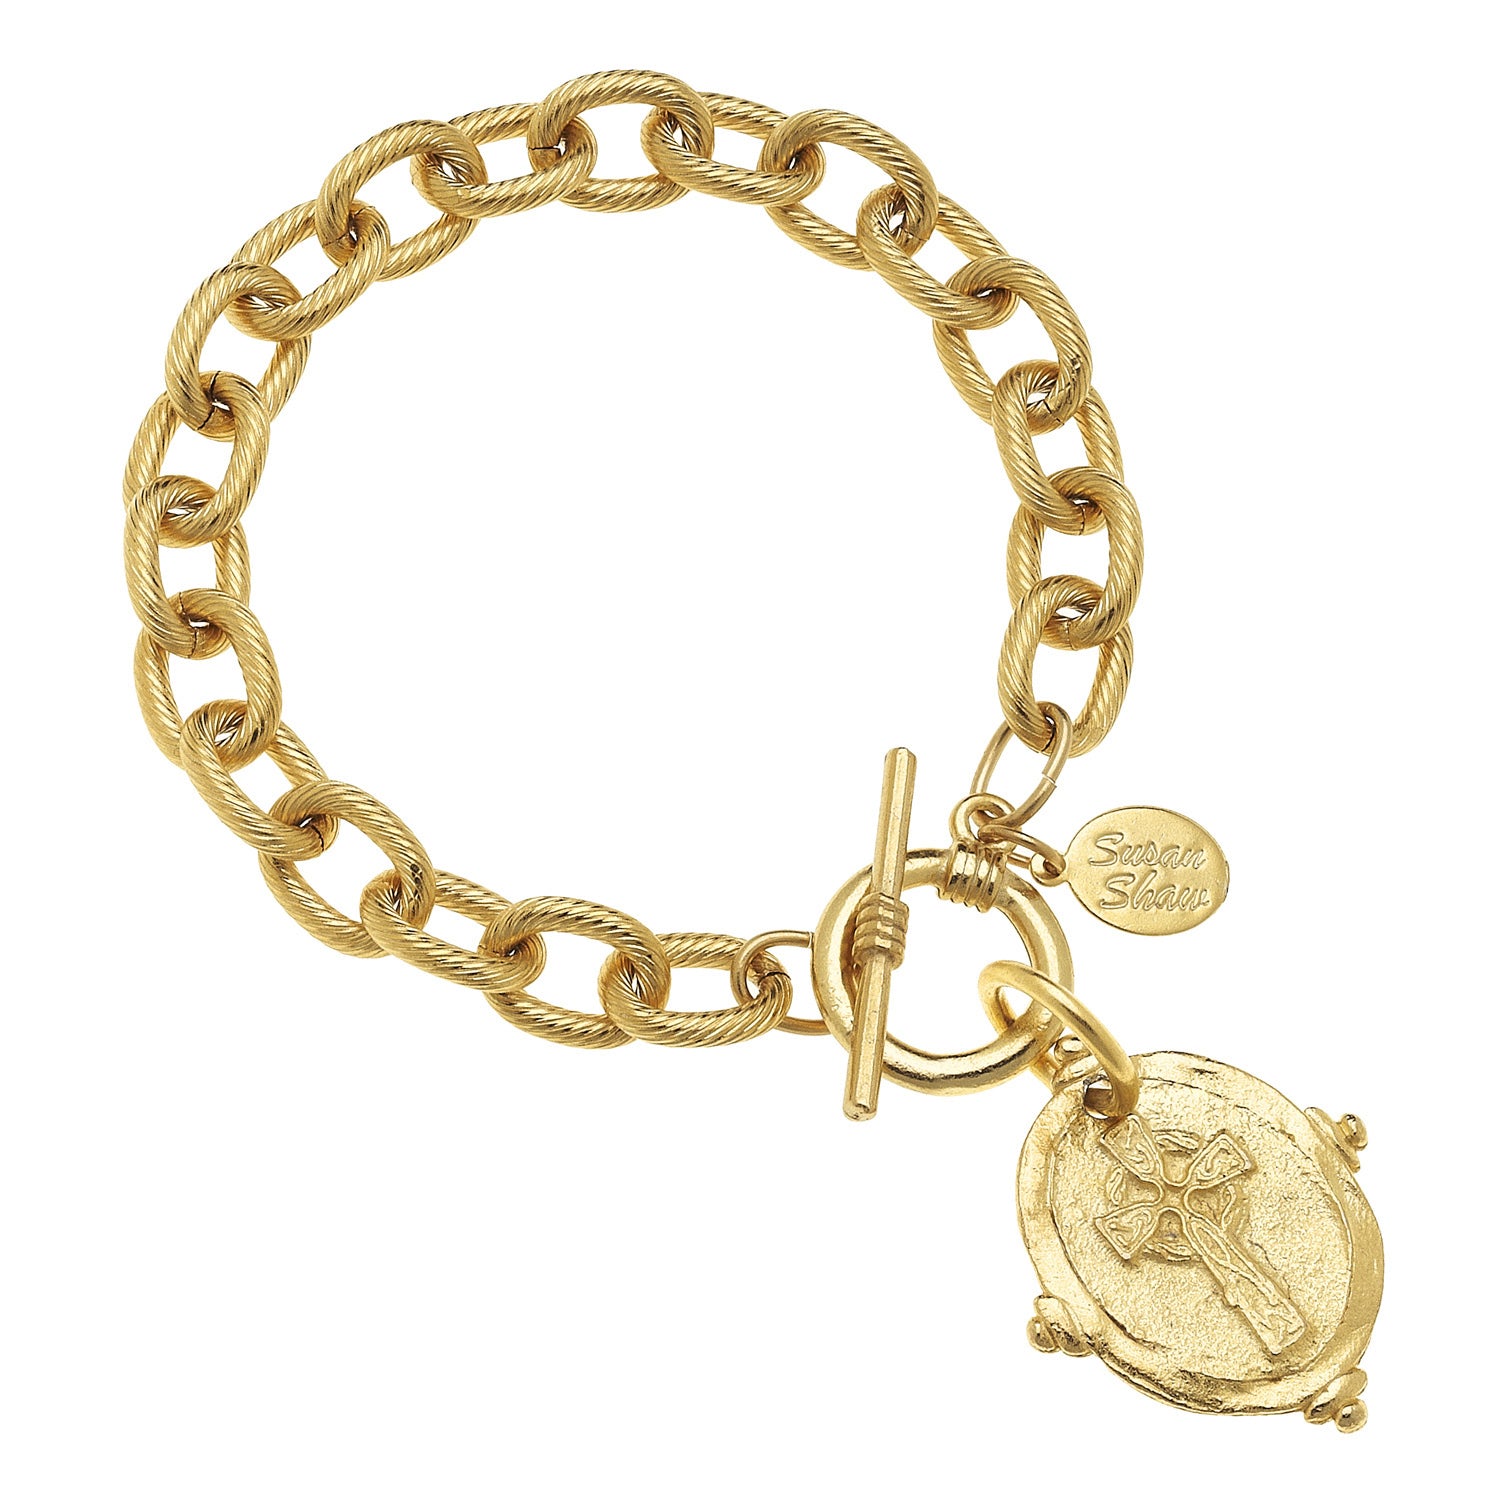 Susan Shaw Handcast Gold "Cross" Intaglio Bracelet